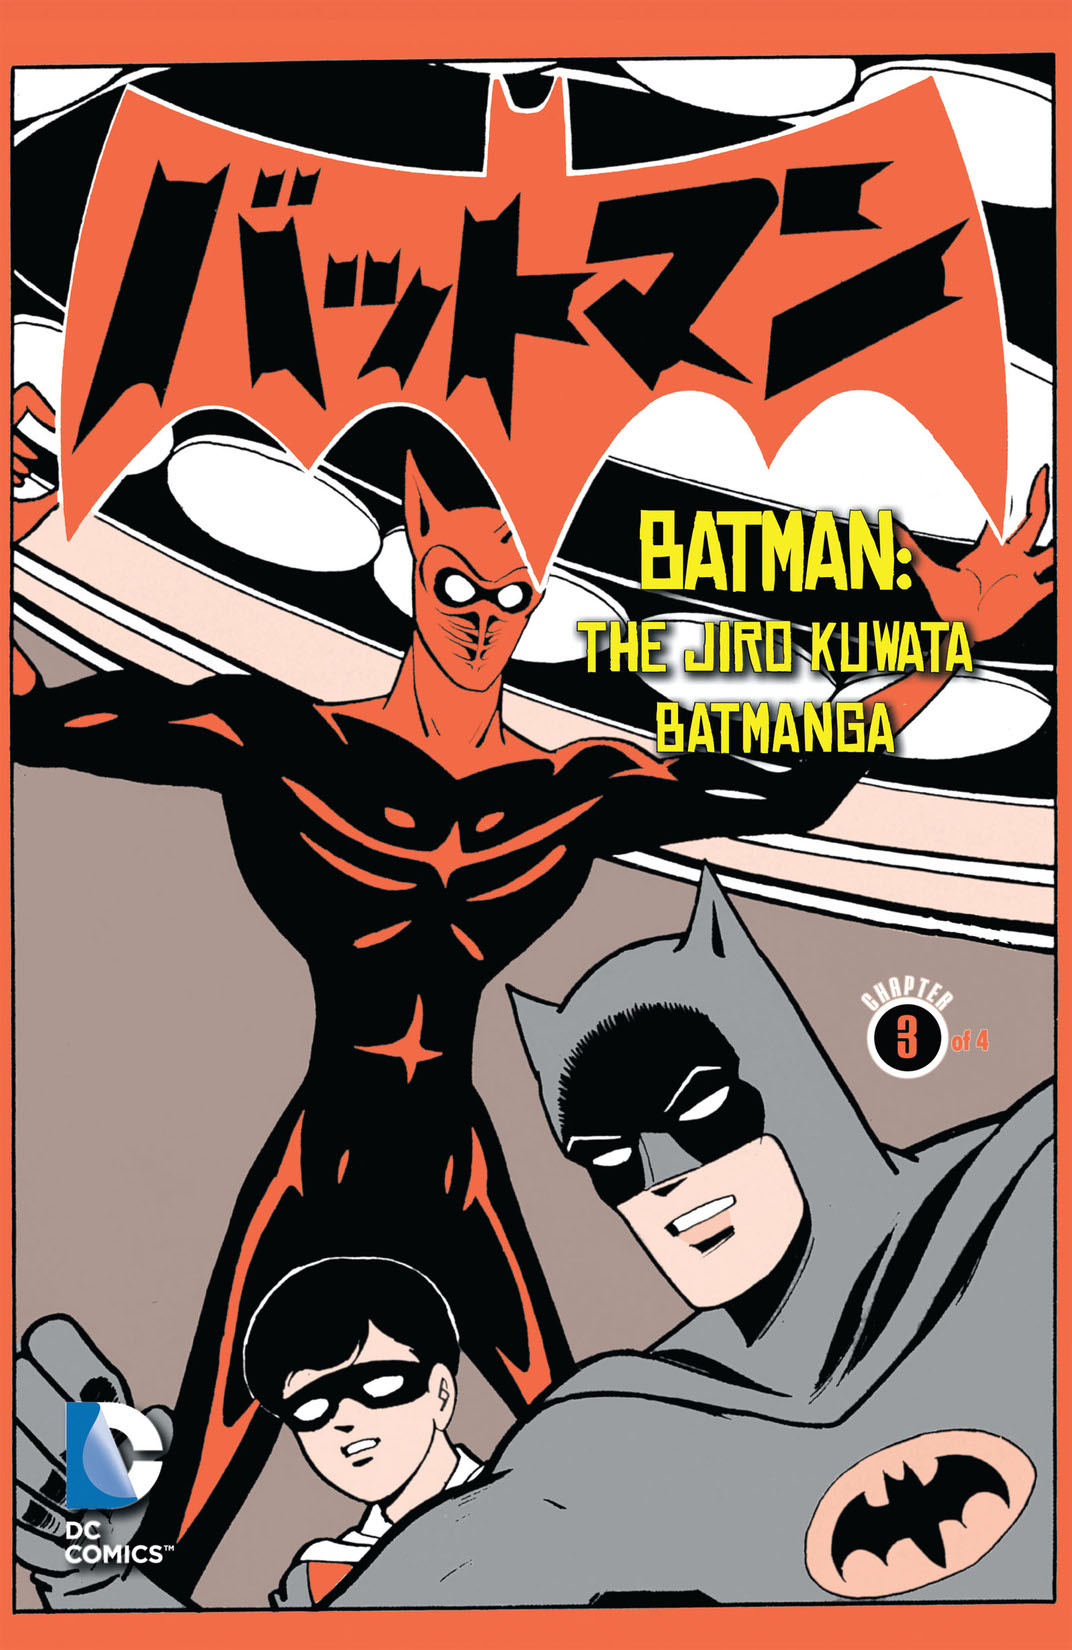 Batman: The Jiro Kuwata Batmanga #18 preview images